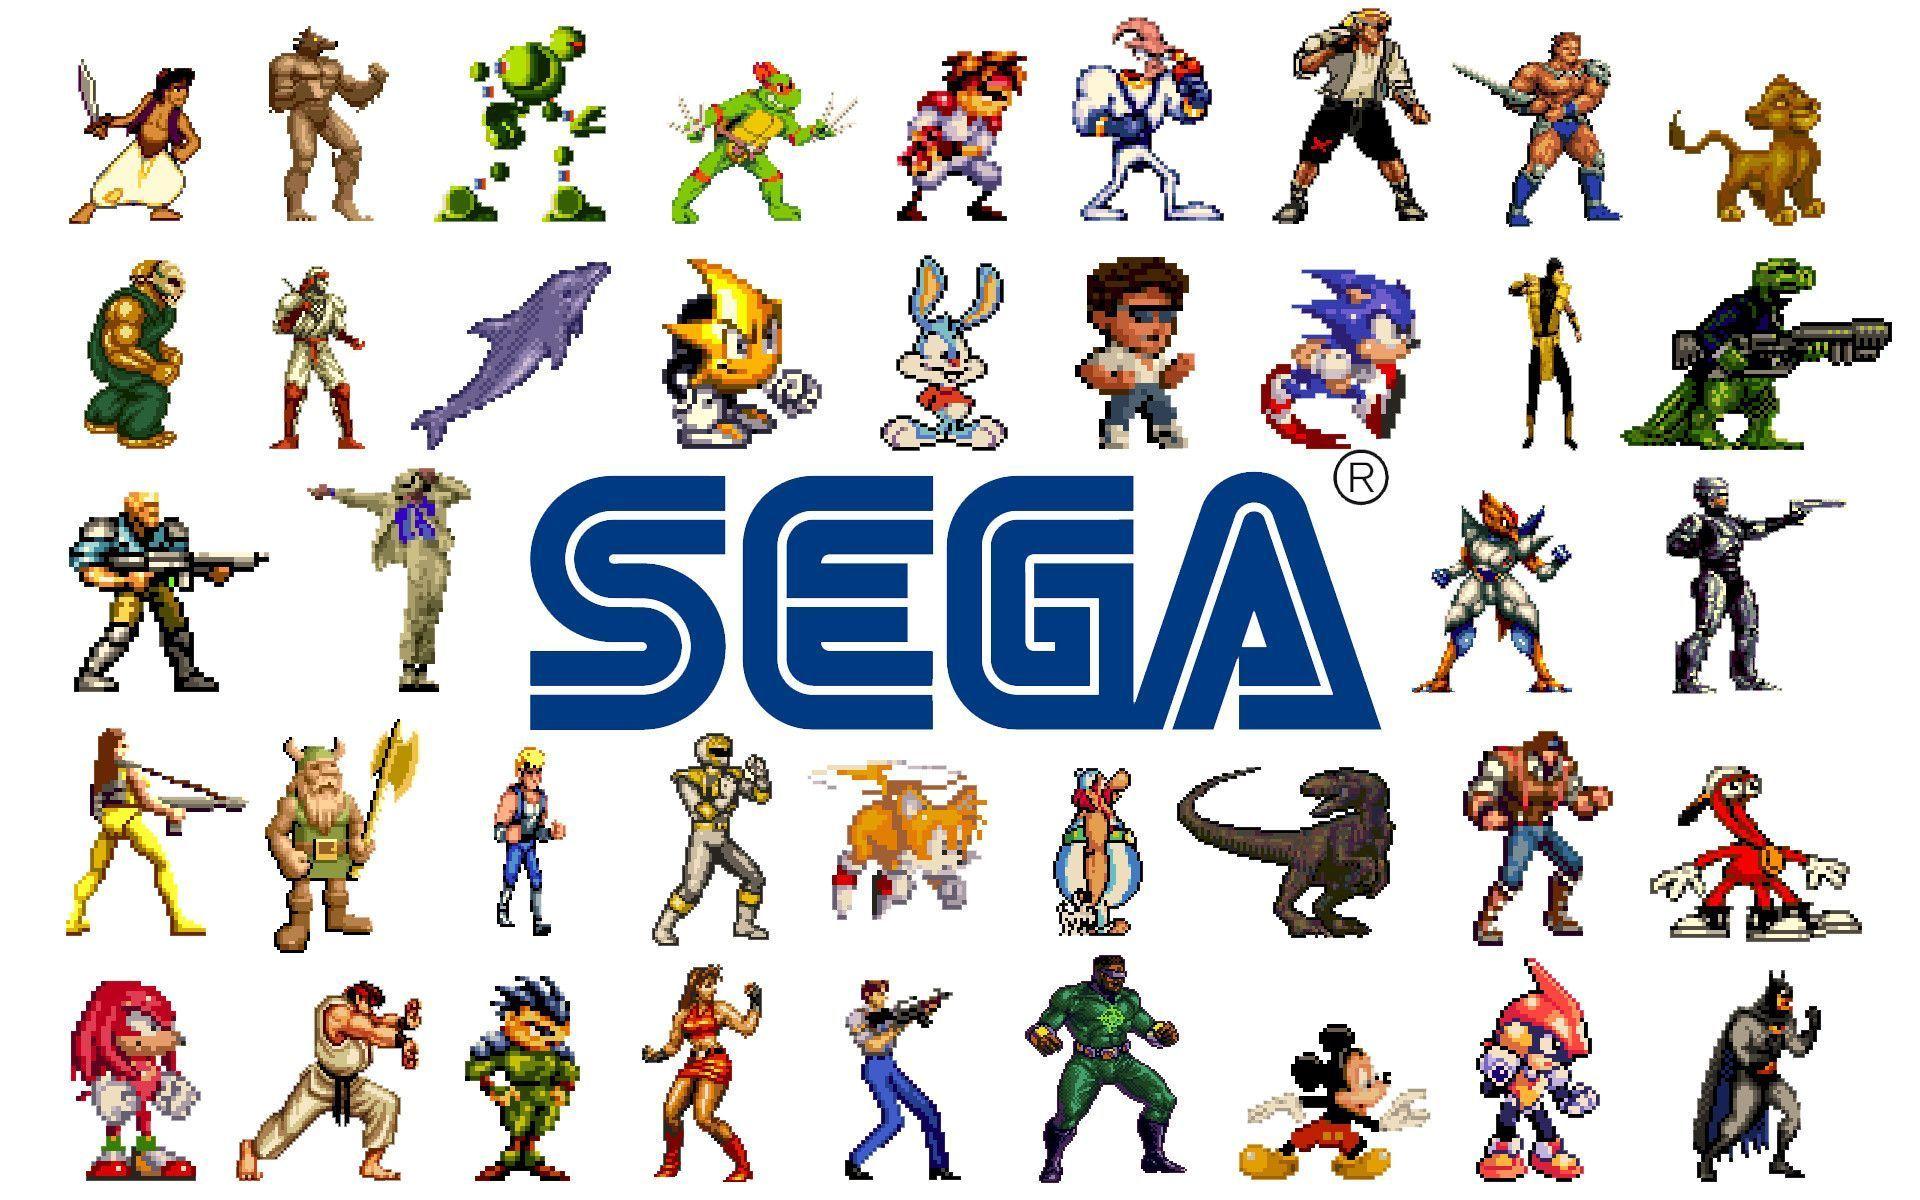 Fonds d&Sega : tous les wallpapers Sega